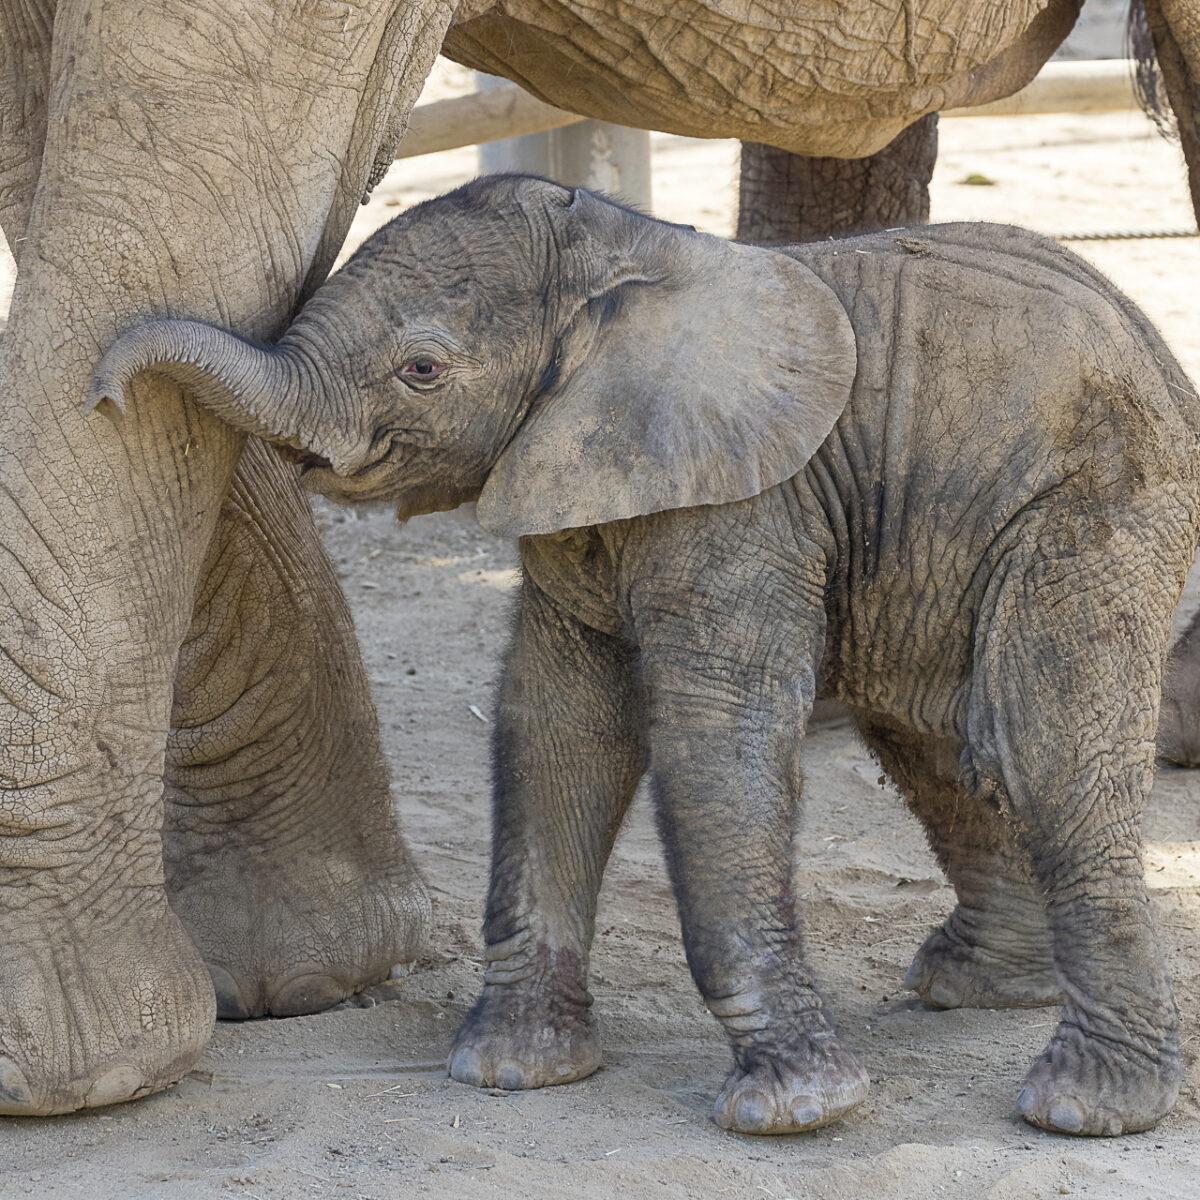 Baby Elephants are “Awwww”fully Cute! – San Diego Zoo Wildlife Alliance  Stories